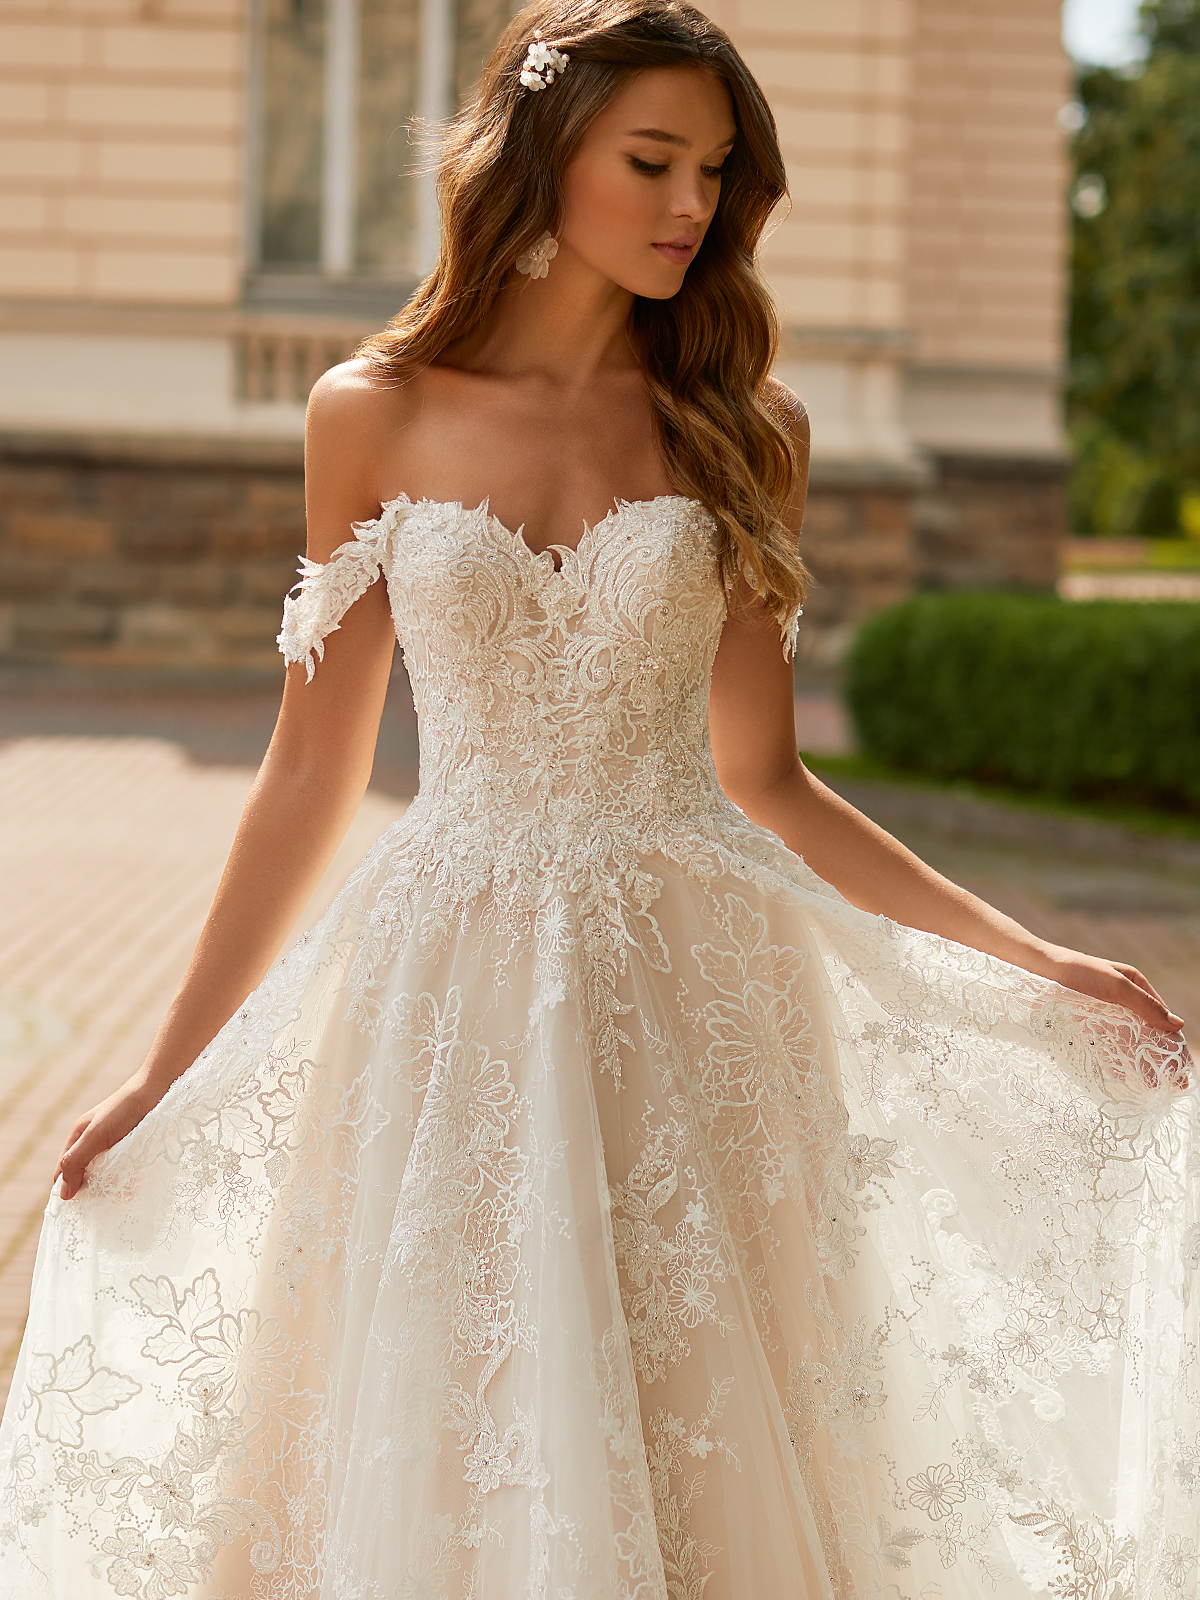 White Spring Wedding Dress